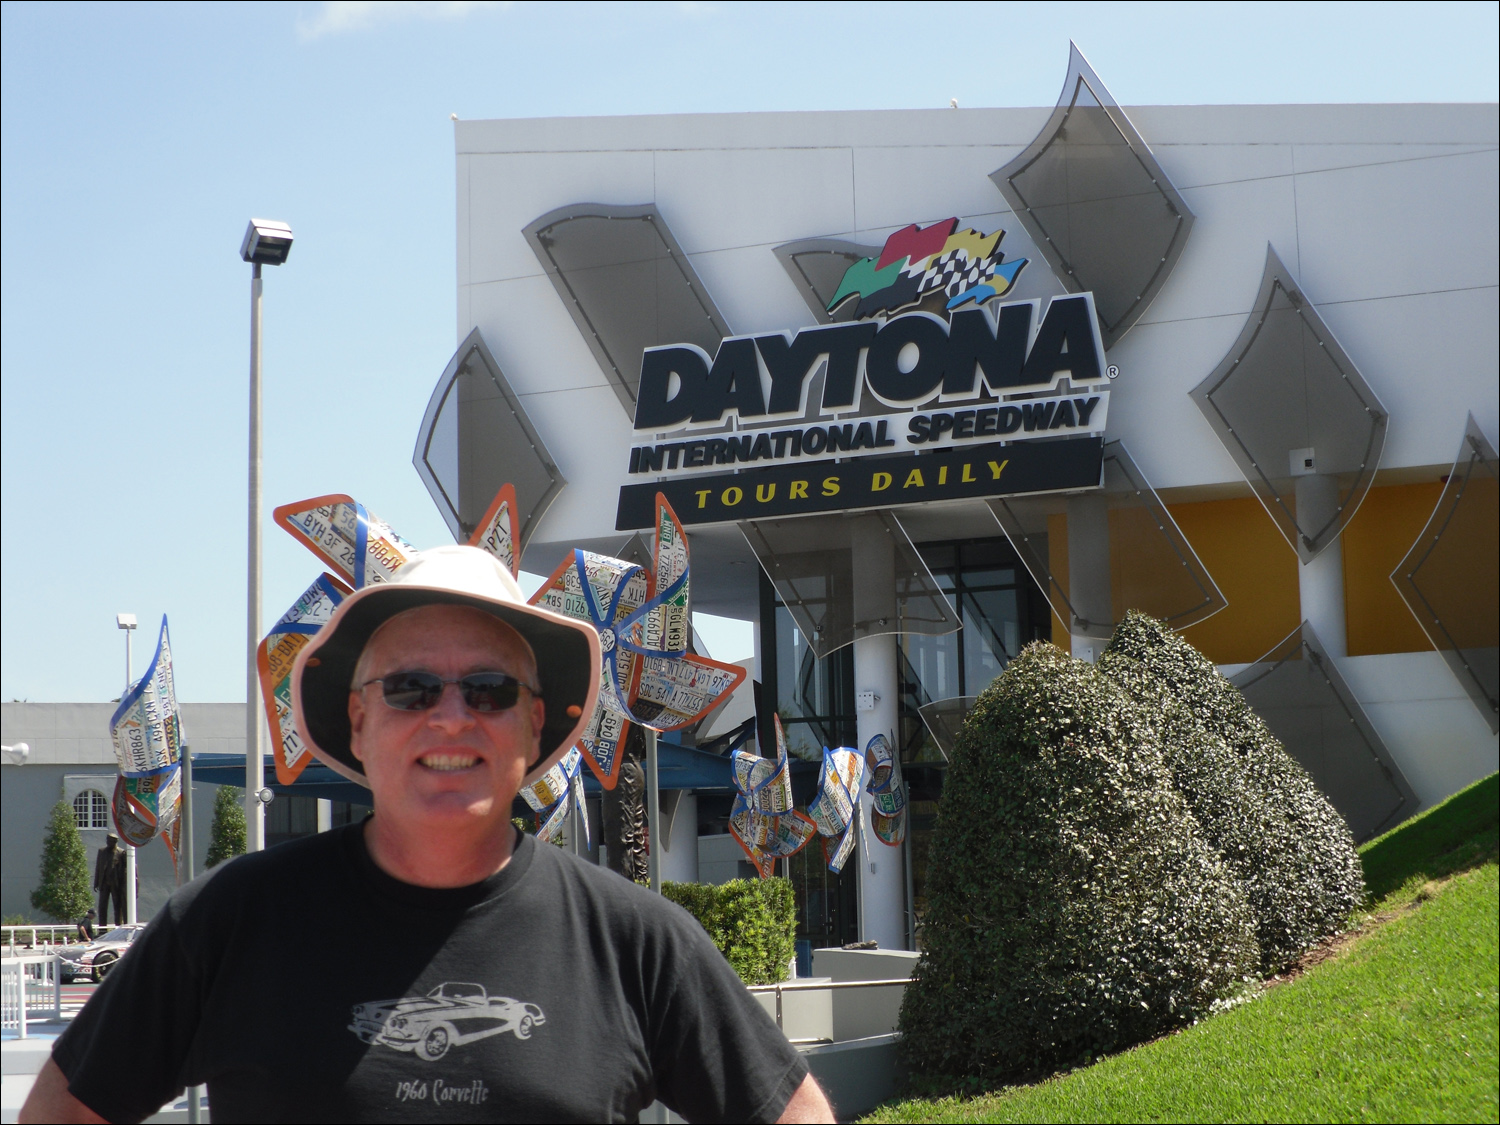 Daytona Raceway